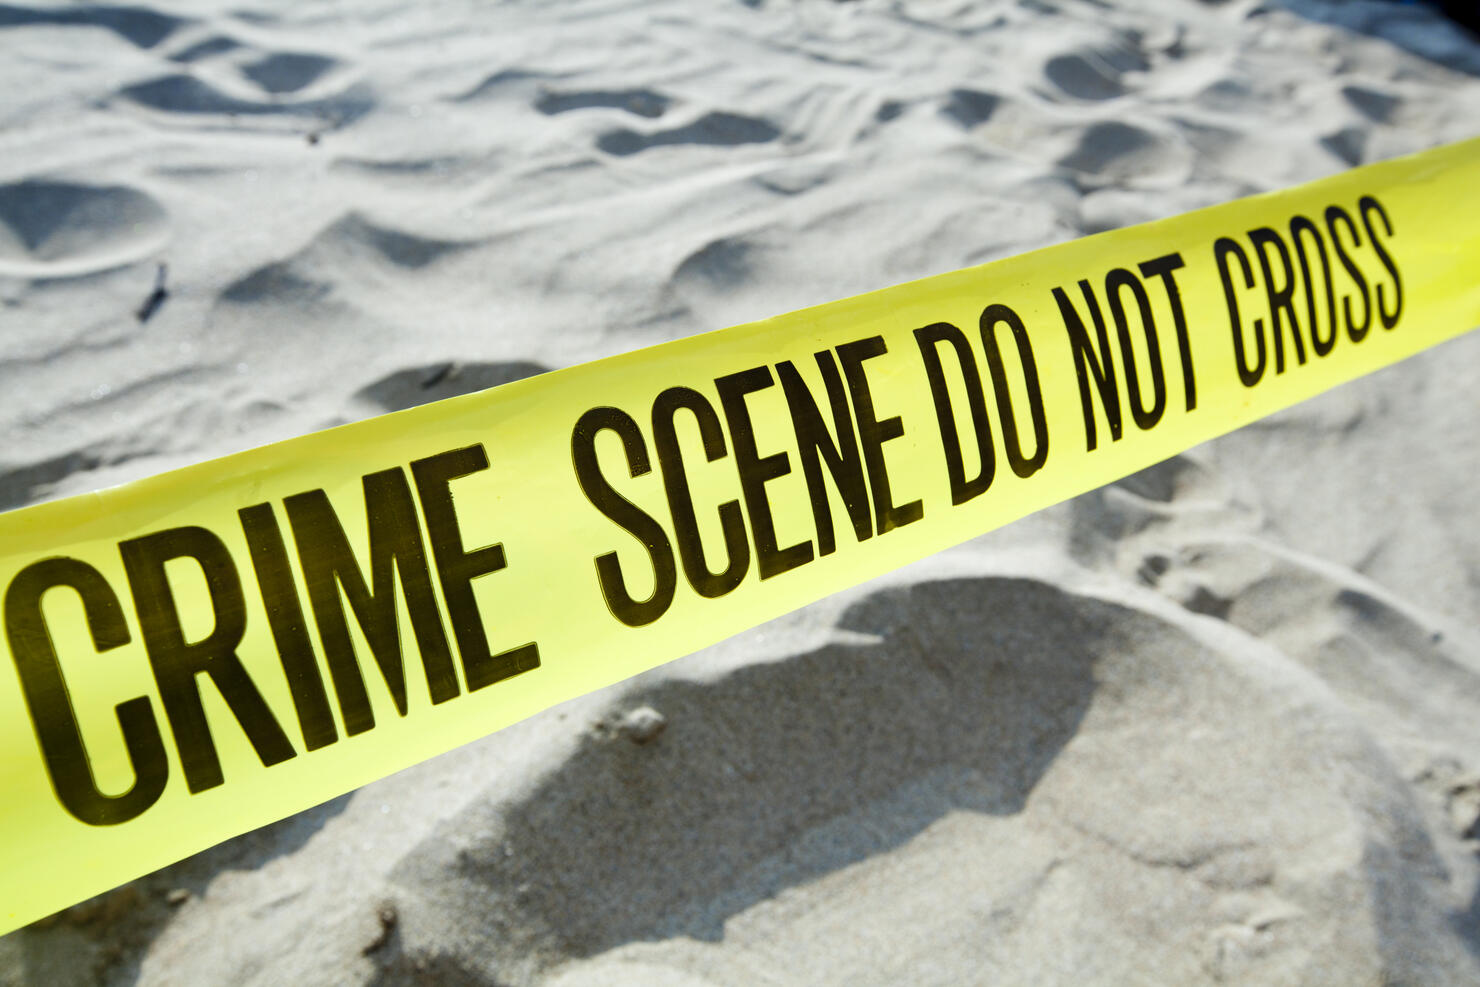 Crime Scene on the sand